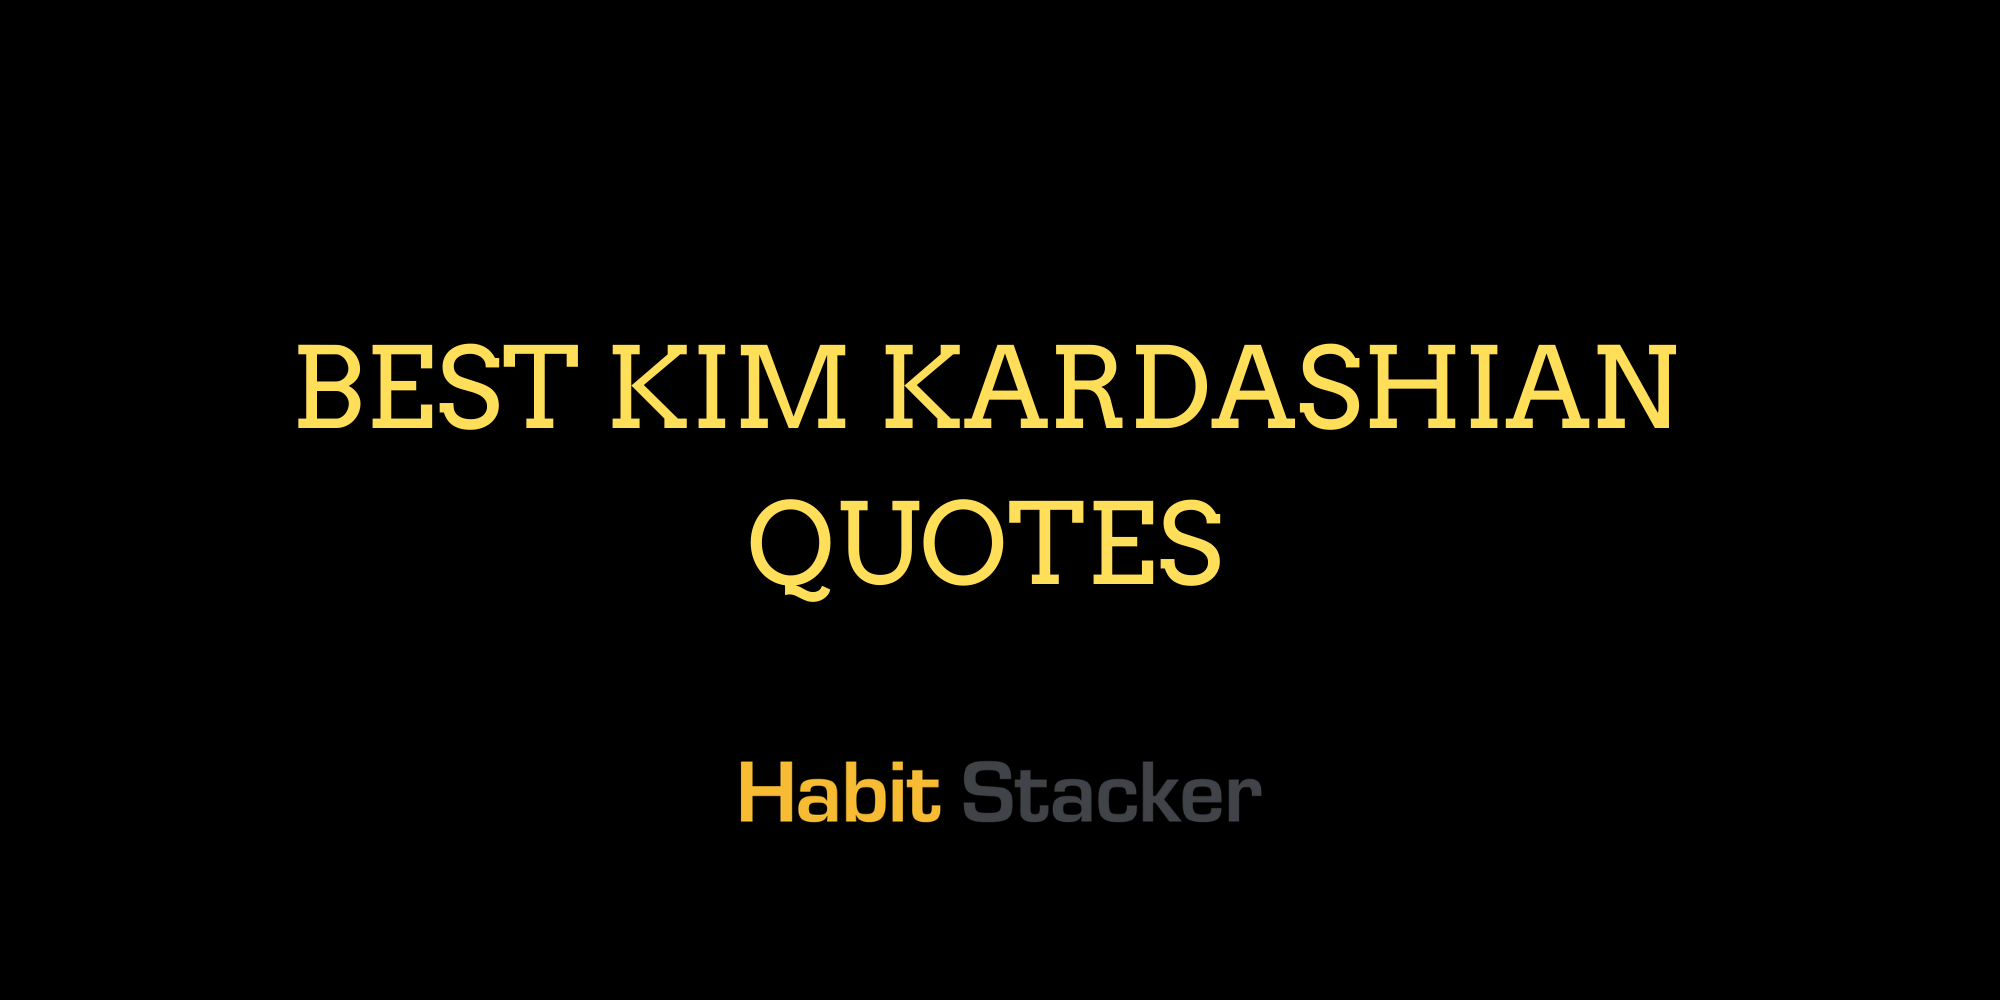 40 Best Kim Kardashian Quotes | Habit Stacker